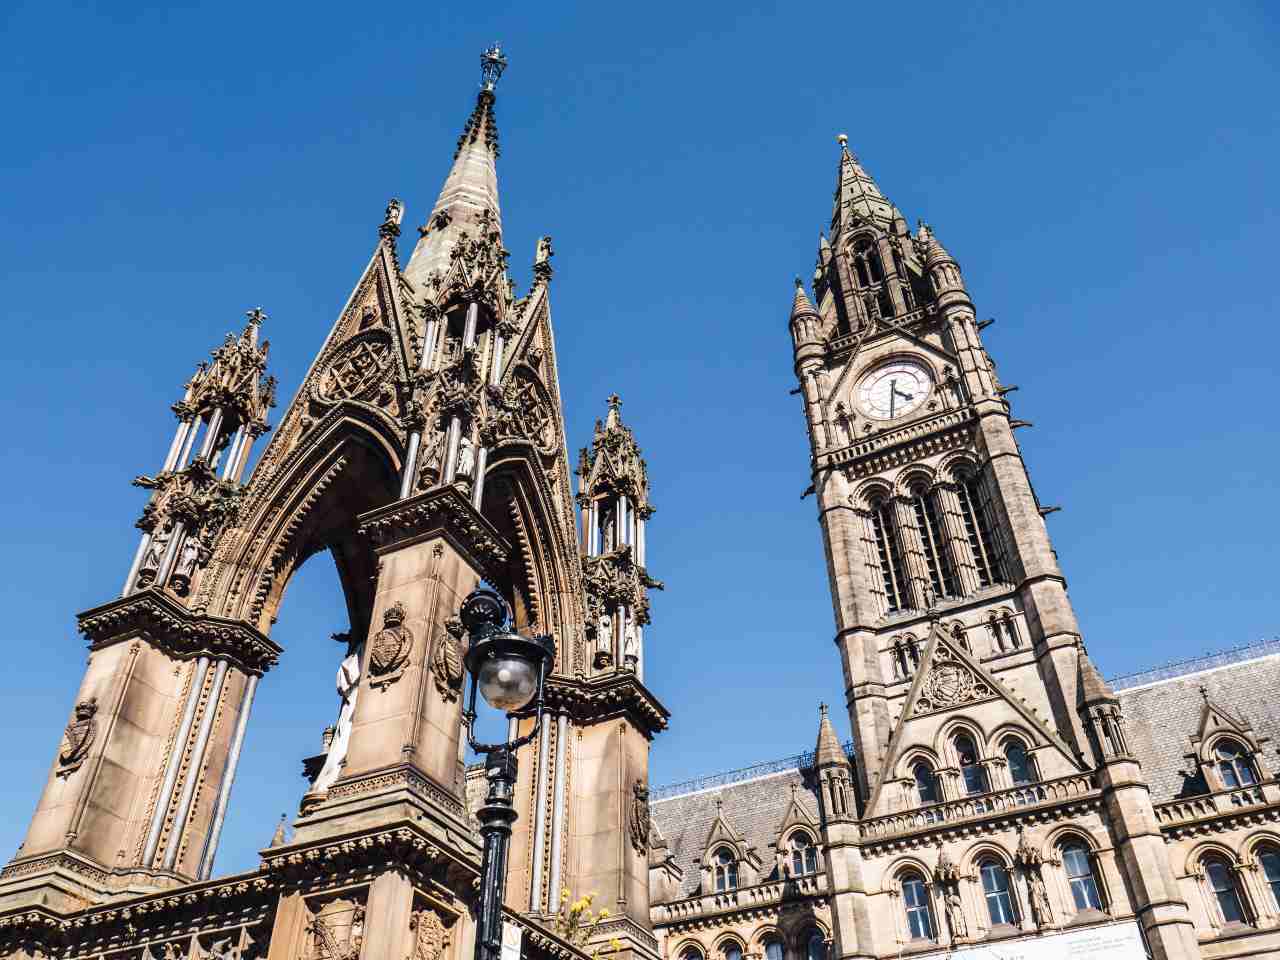 Famous Manchester famous landmarks